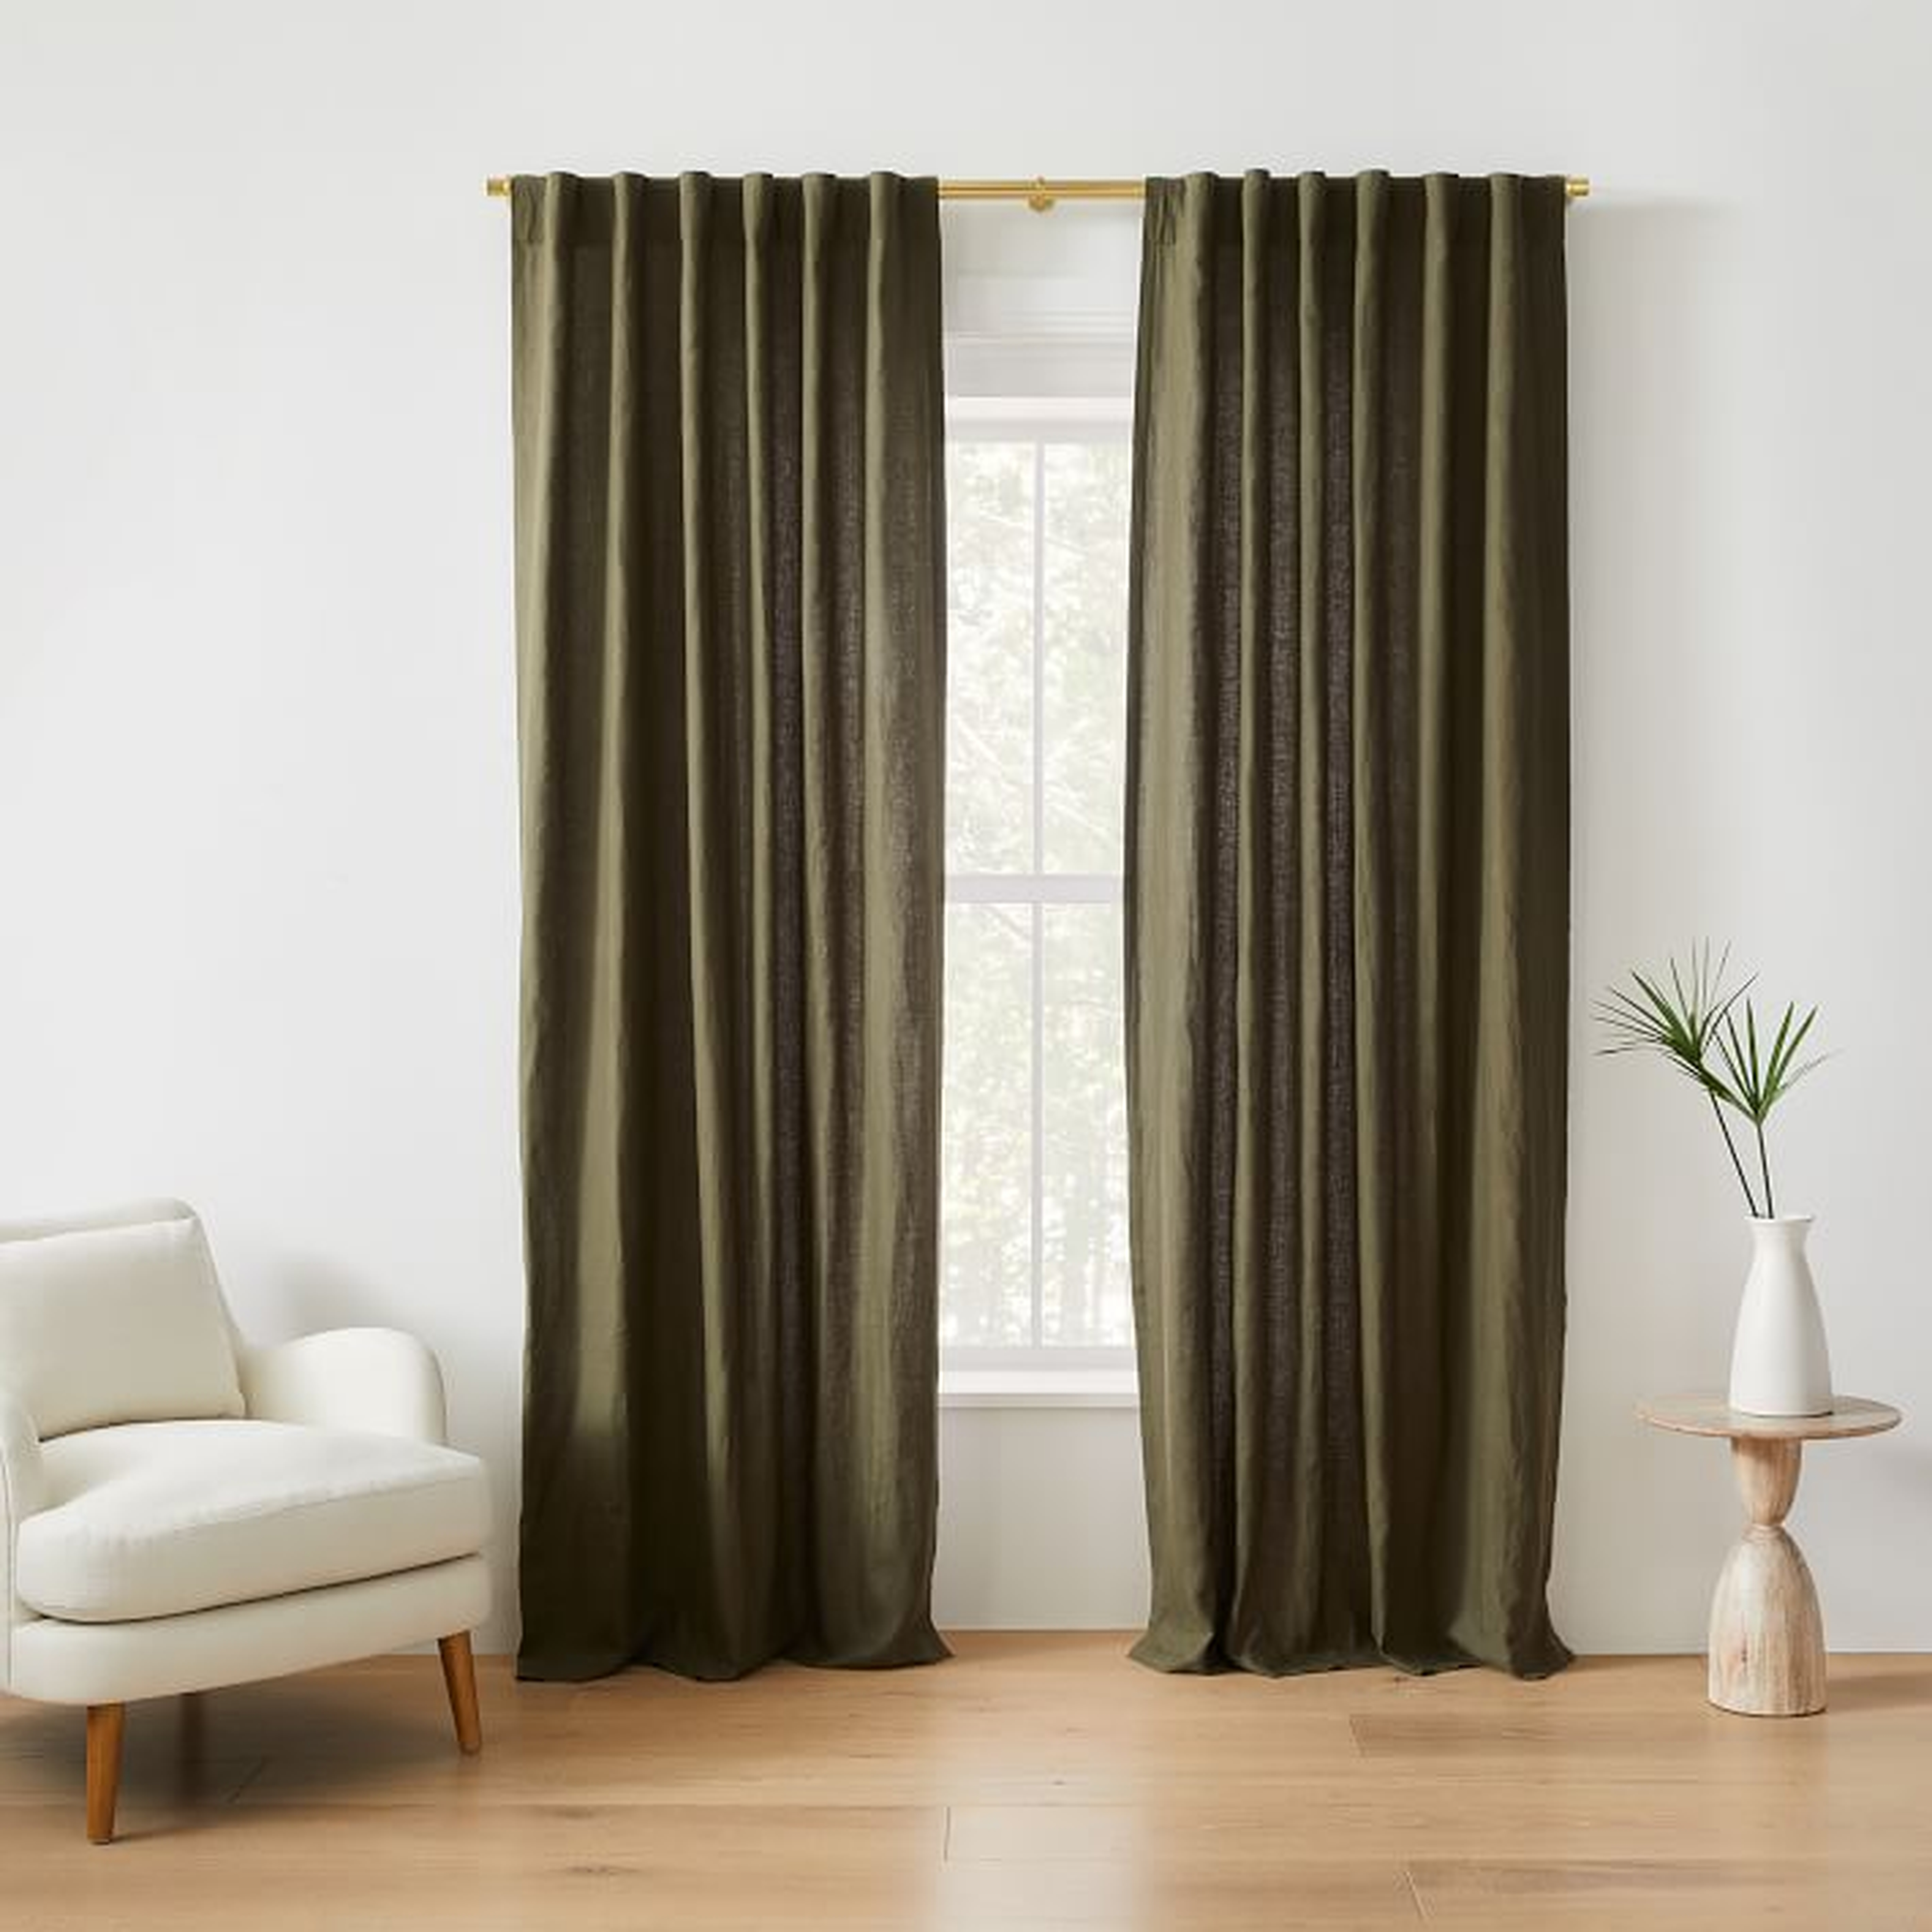 Sheer European Linen Curtain, 48"x108", Dark Olive, Set of 2 - West Elm